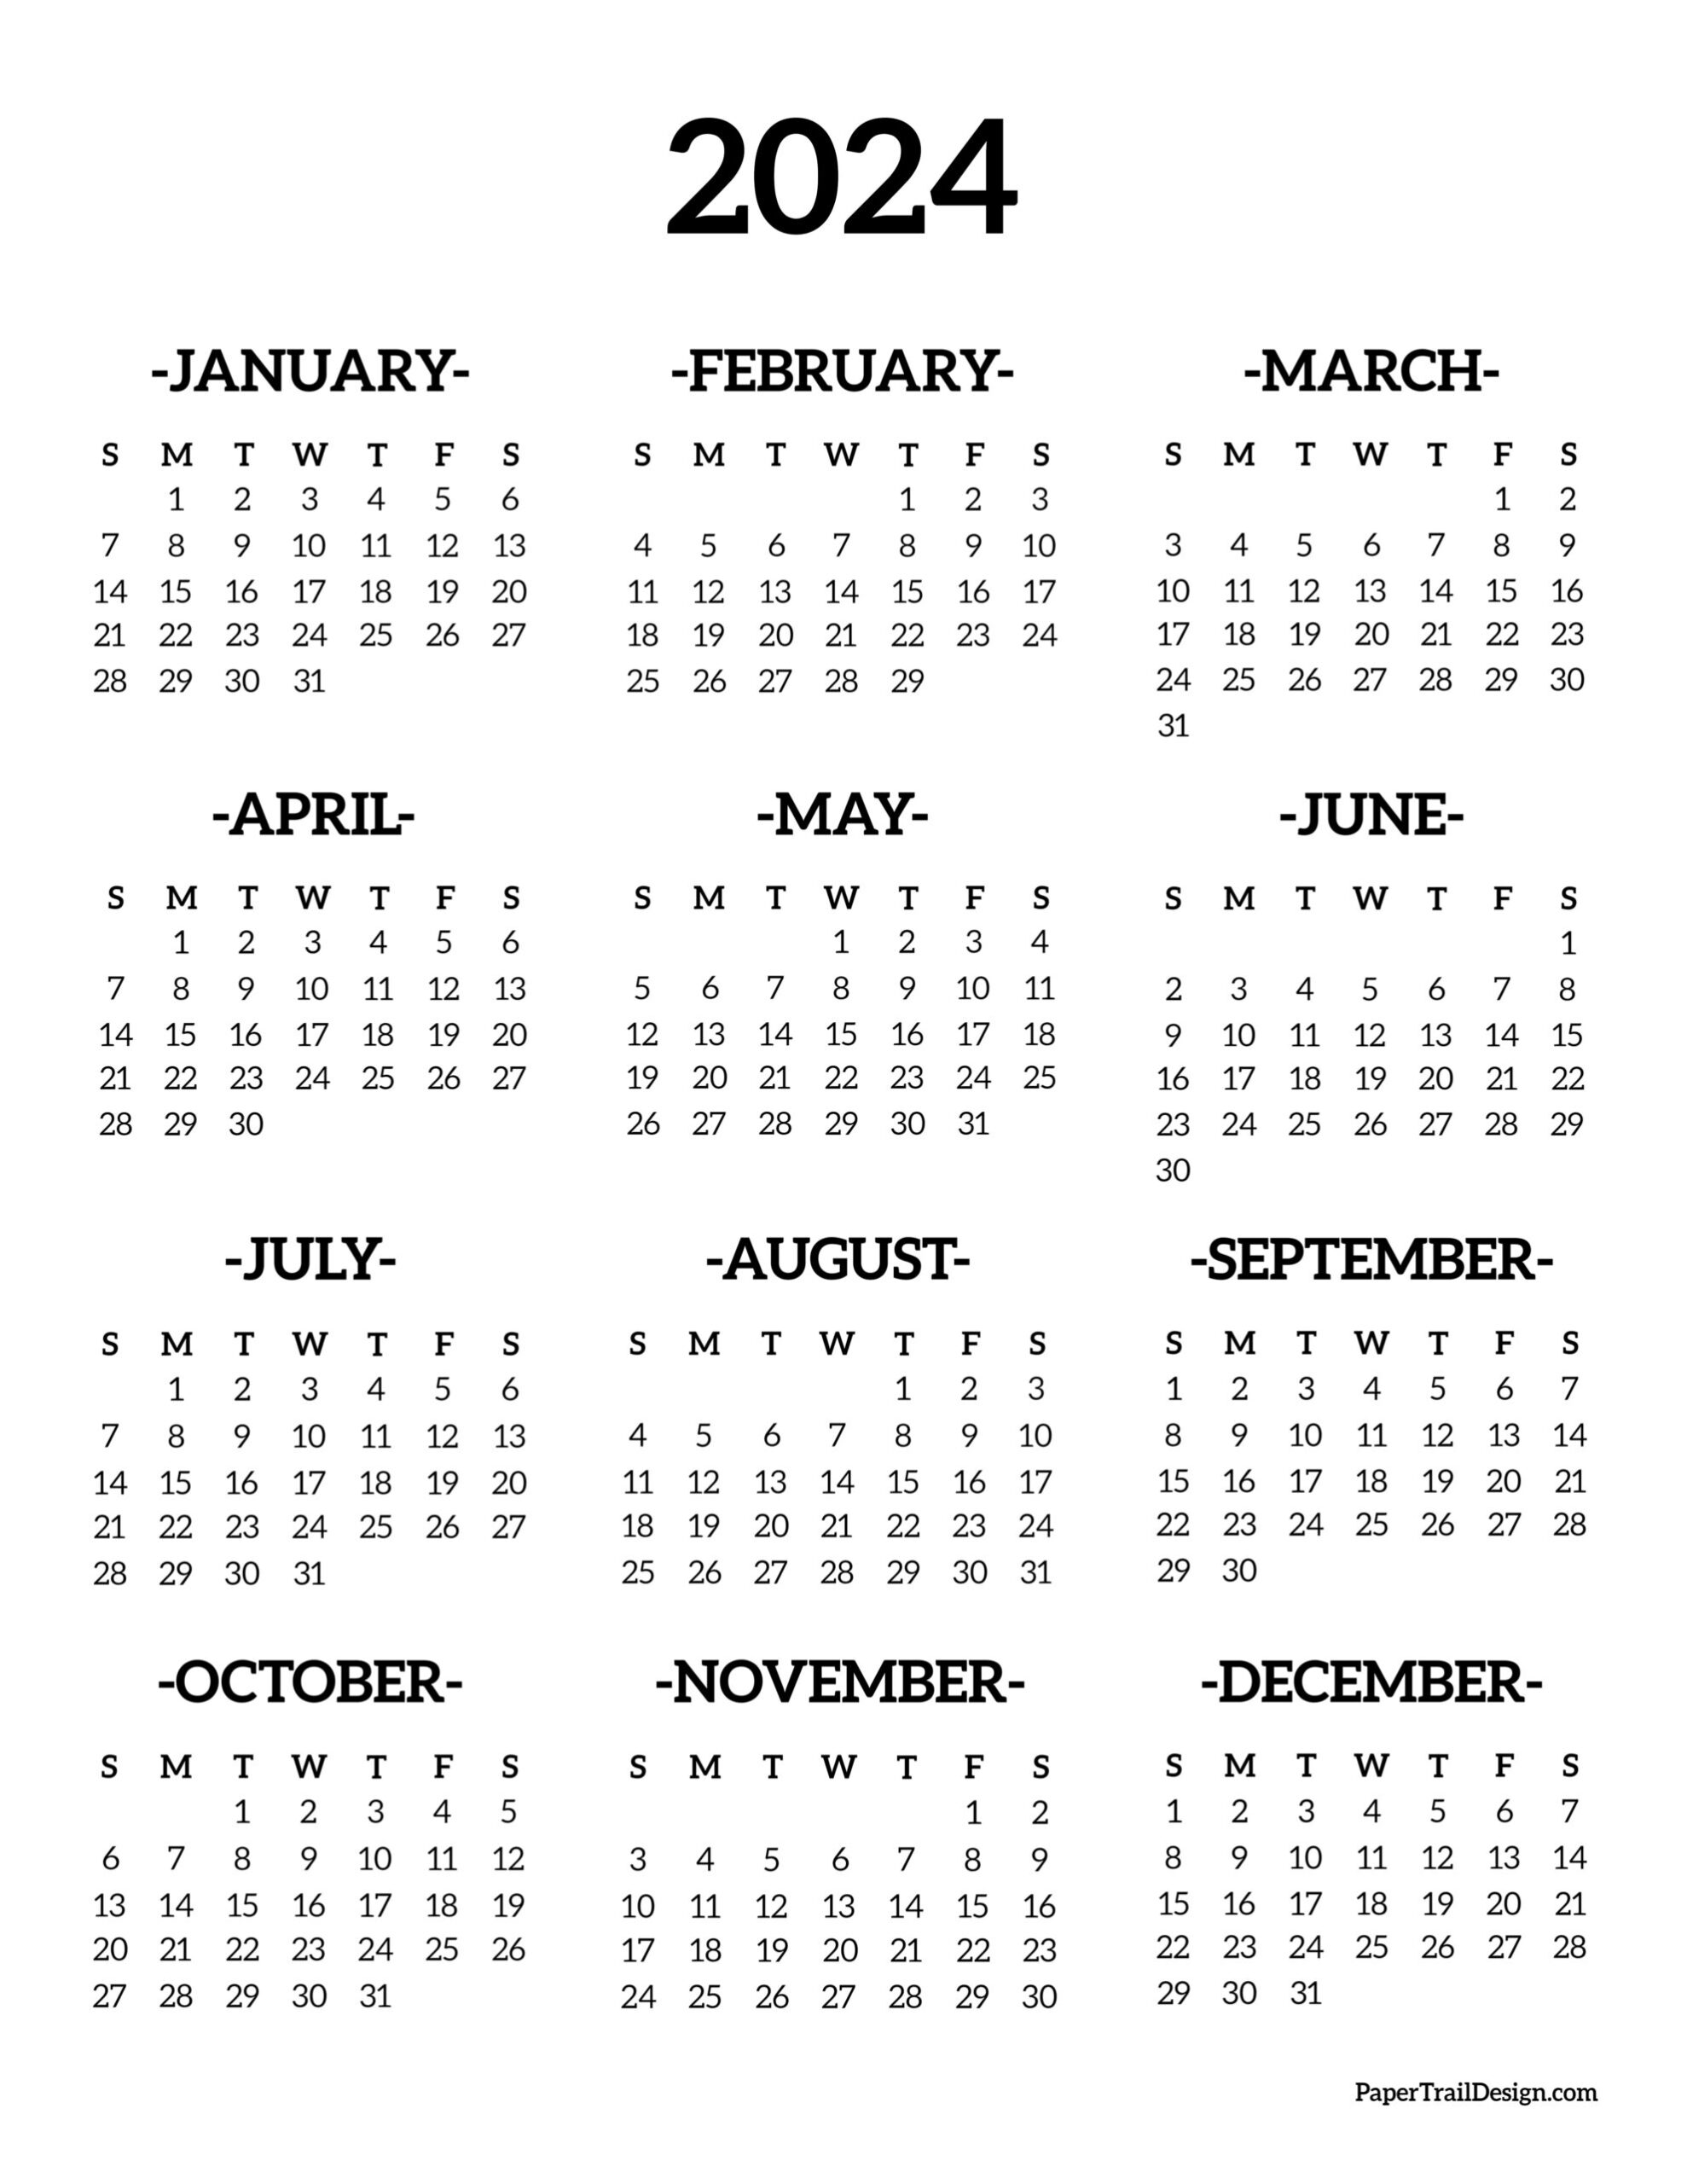 Calendar 2024 Printable One Page - Paper Trail Design for 2024 Calendar Free Printable